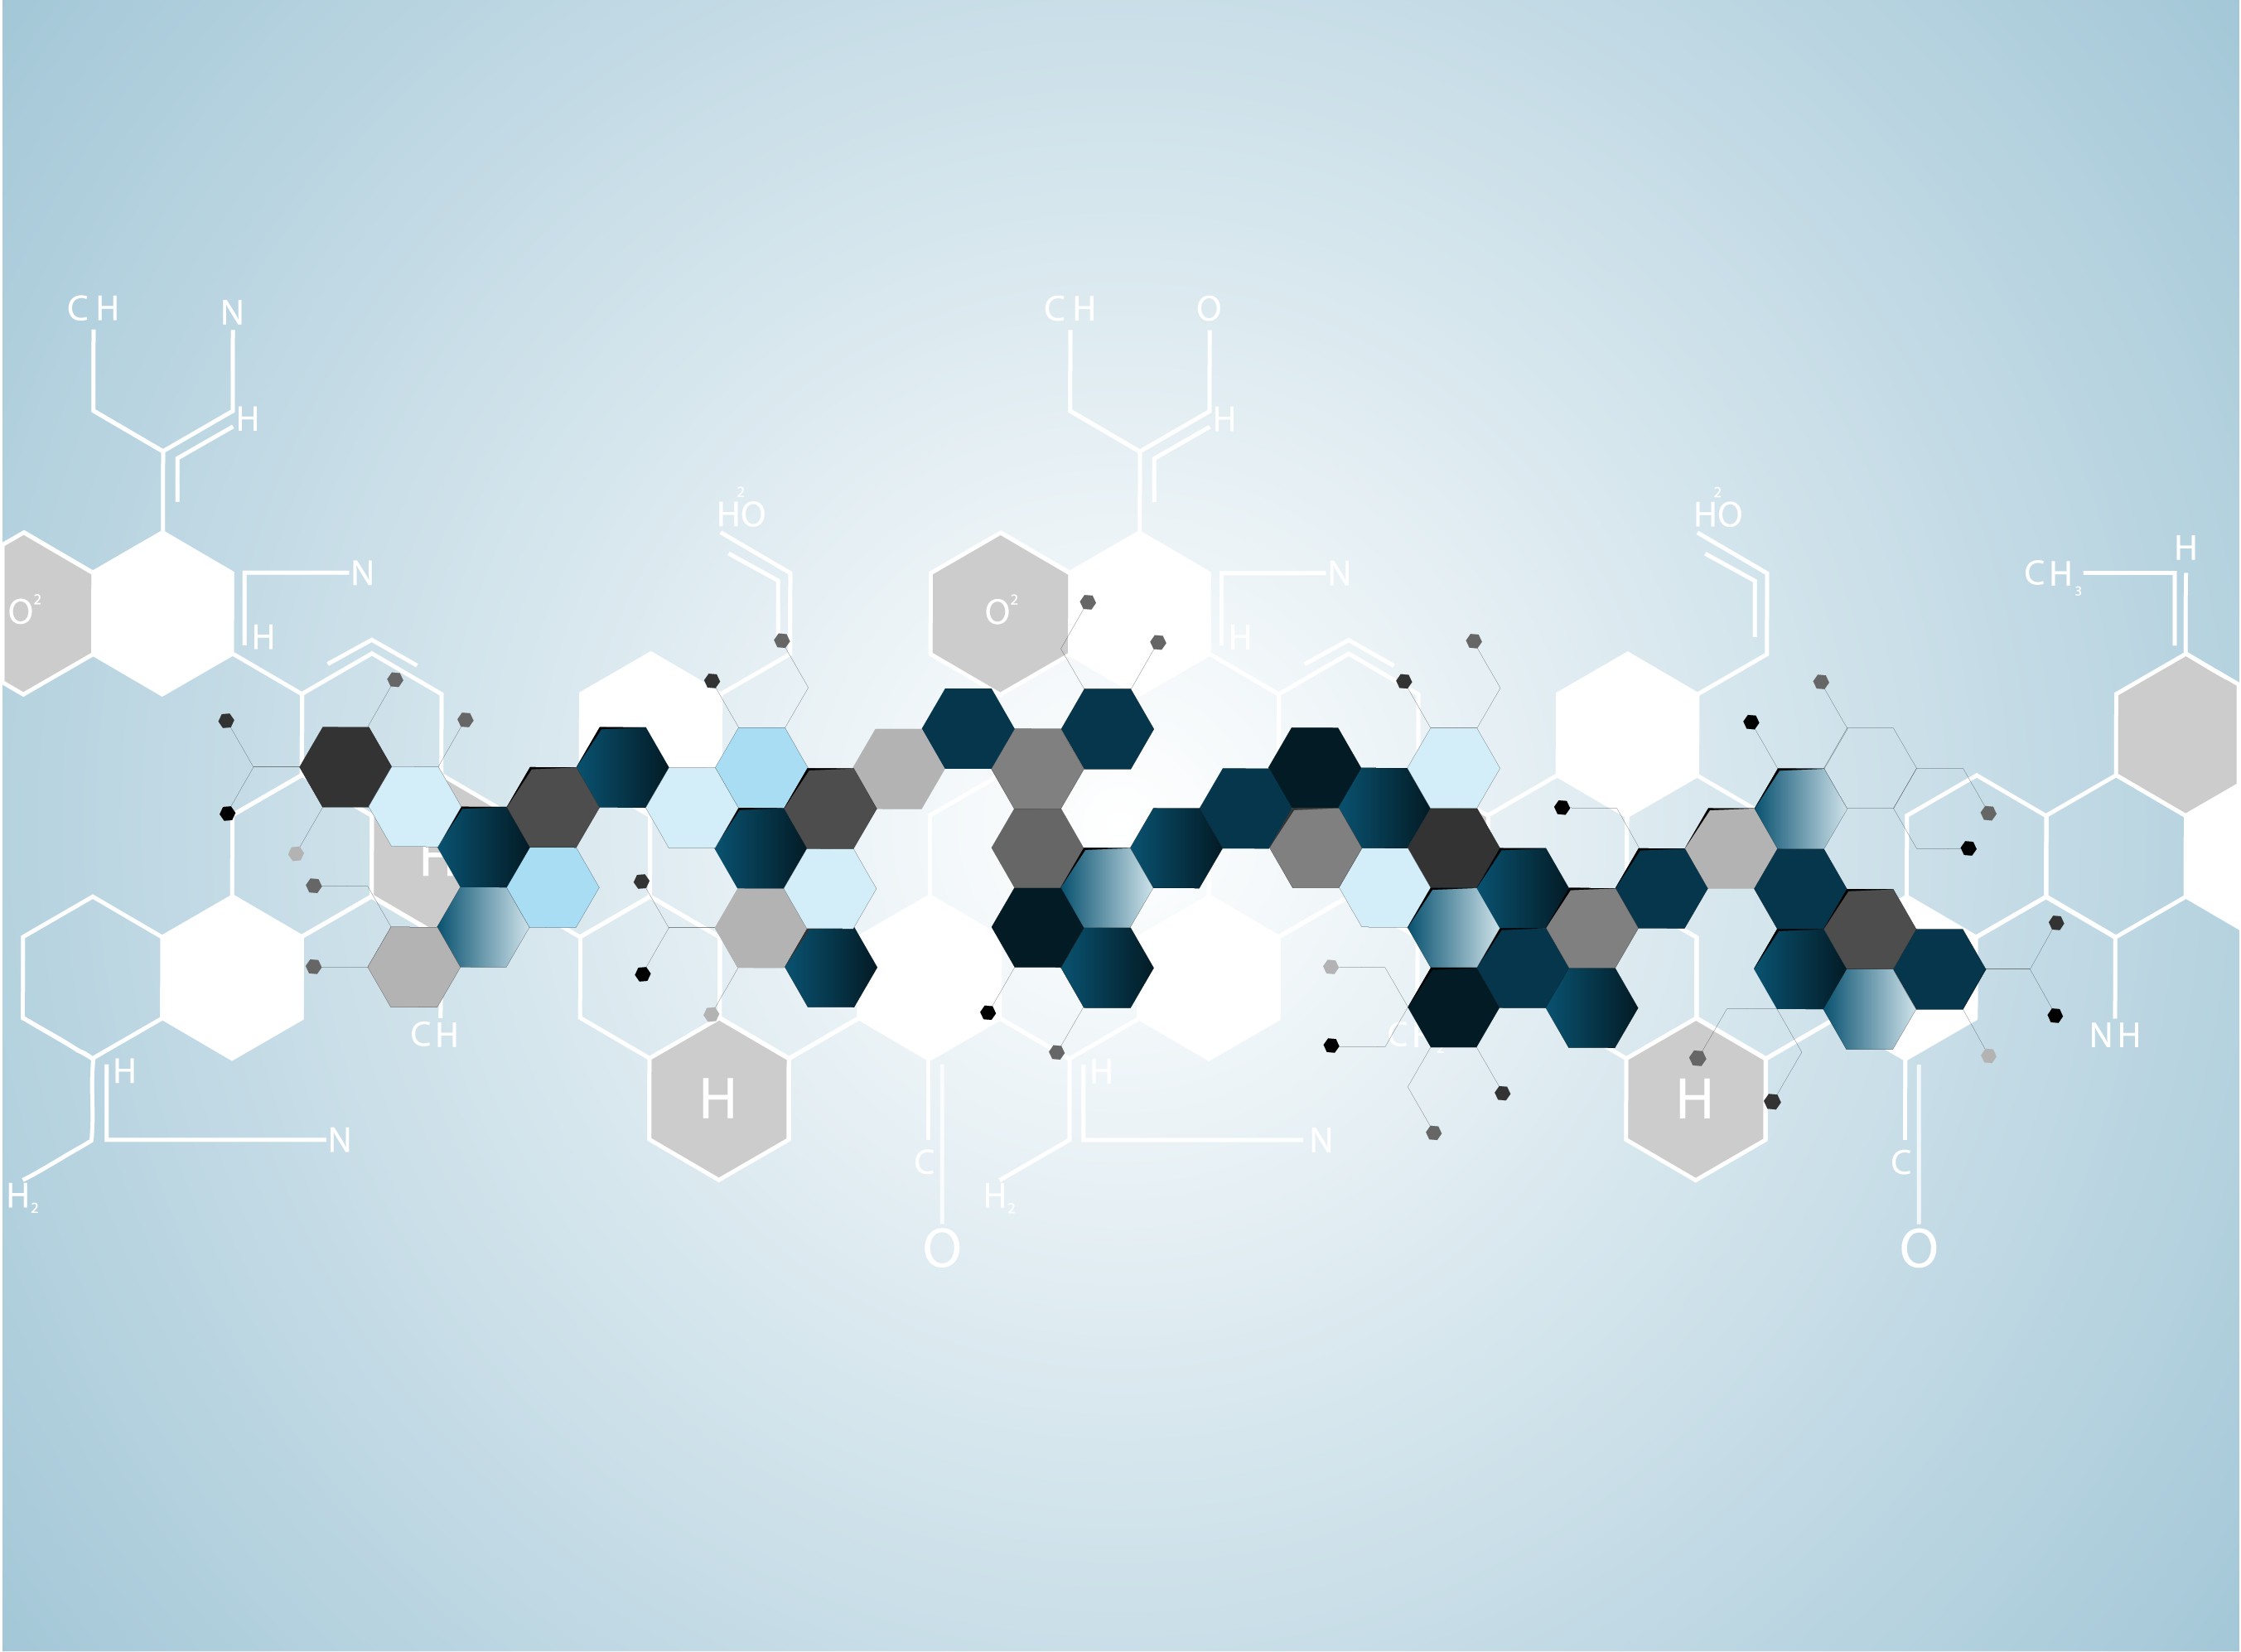 Horizontal line of interlocking hexagons in shades of blue and white and black, representing genomic data sharing.